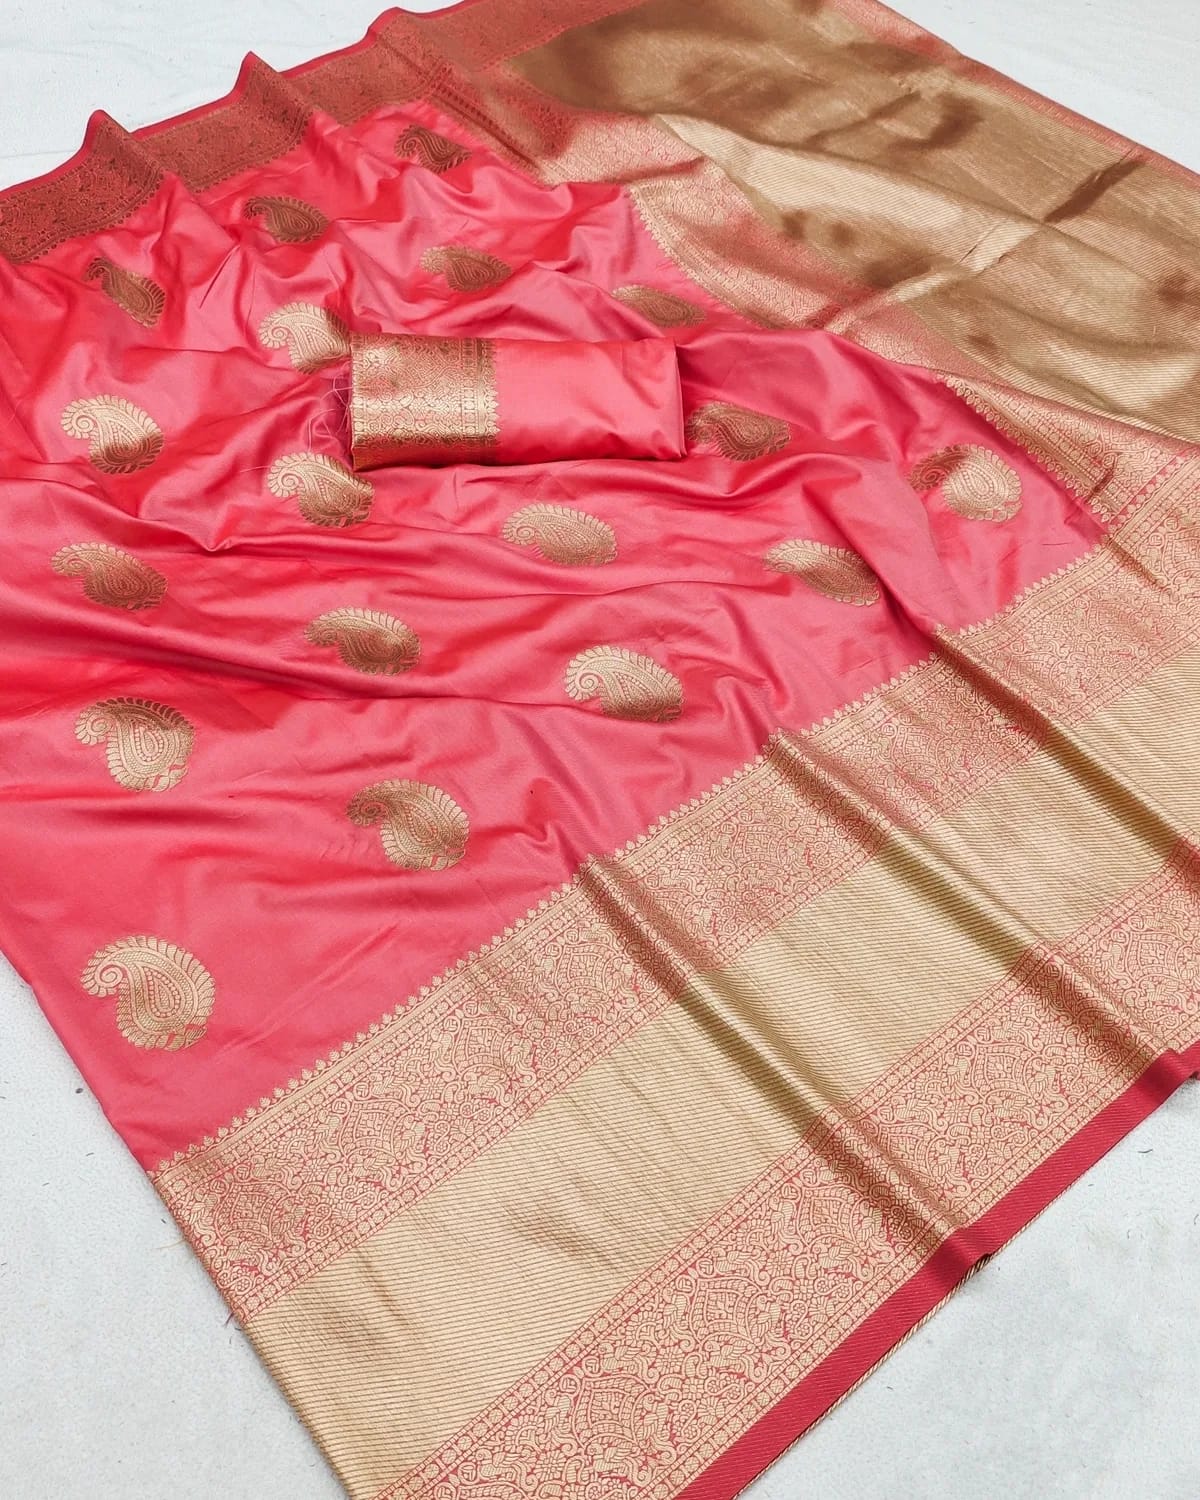 saree for bride and wedding